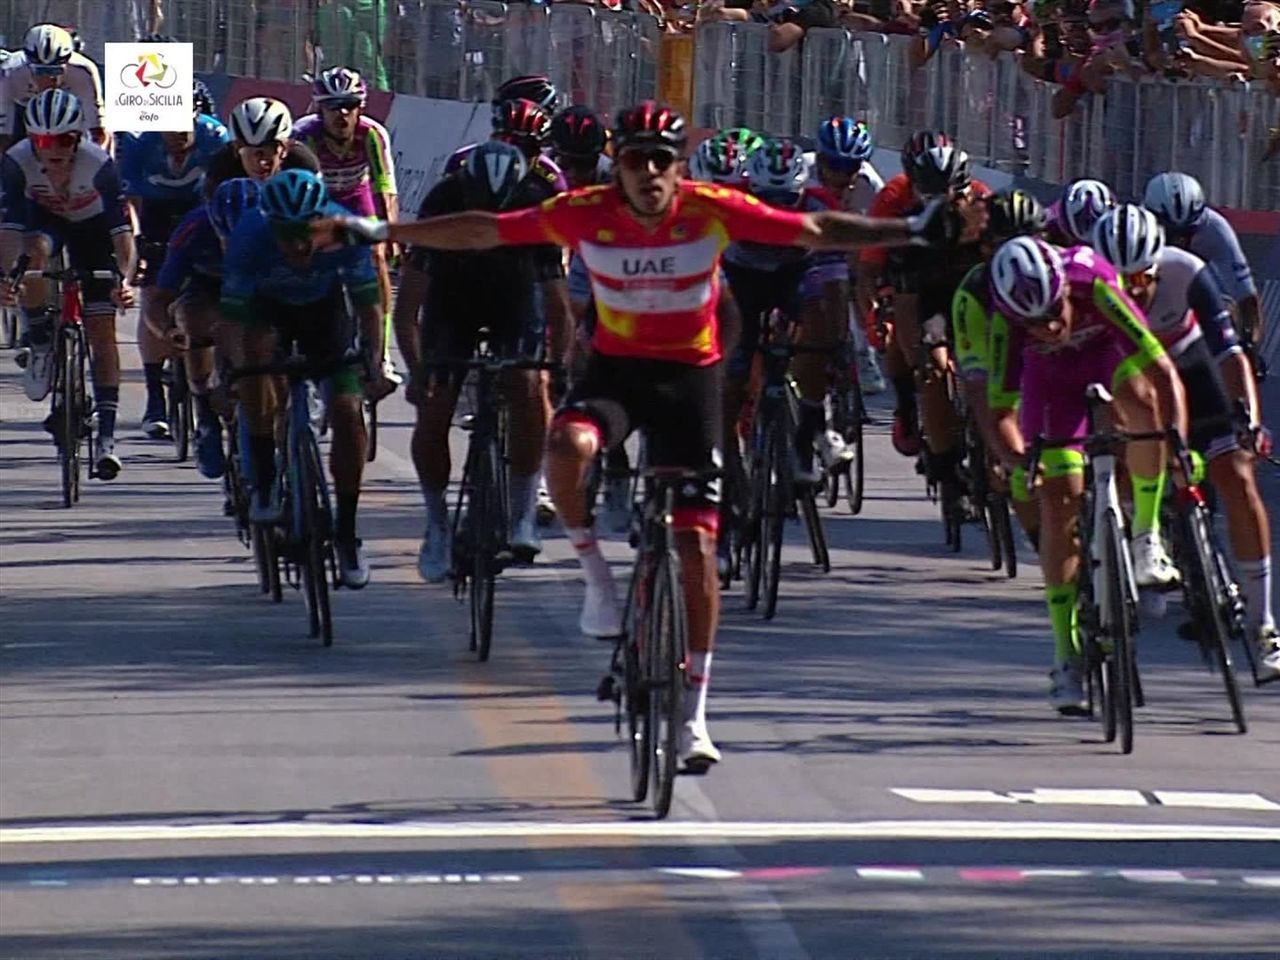 Giro di Sicilia cycling 2021 - Juan Sebastian Molano wins again on Stage 2 - Cycling video